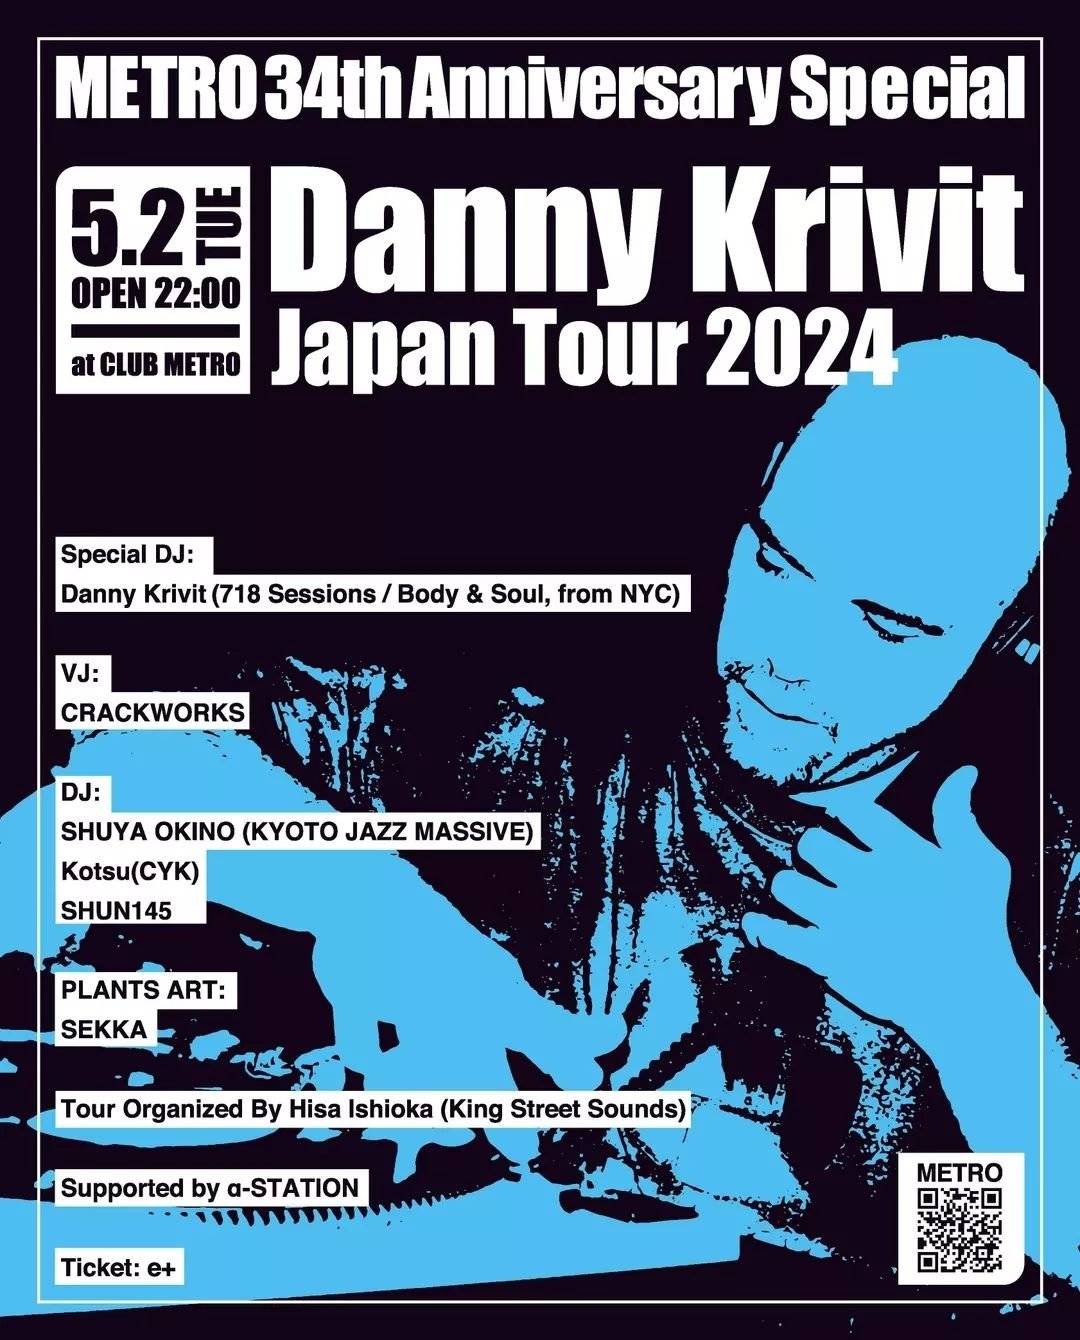 TONIGHT! Thursday, May 2, See you all soon! @metro_kyoto Kyoto. DANNY KRIVIT JAPAN GOLDEN WEEK TOUR 2024. Danny :)

Detail &amp; Tickets: https://www.metro.ne.jp/schedule/240502/

@dannykrivit
Schedule &amp; Releases
https://linktr.ee/DannyKrivit
(Li